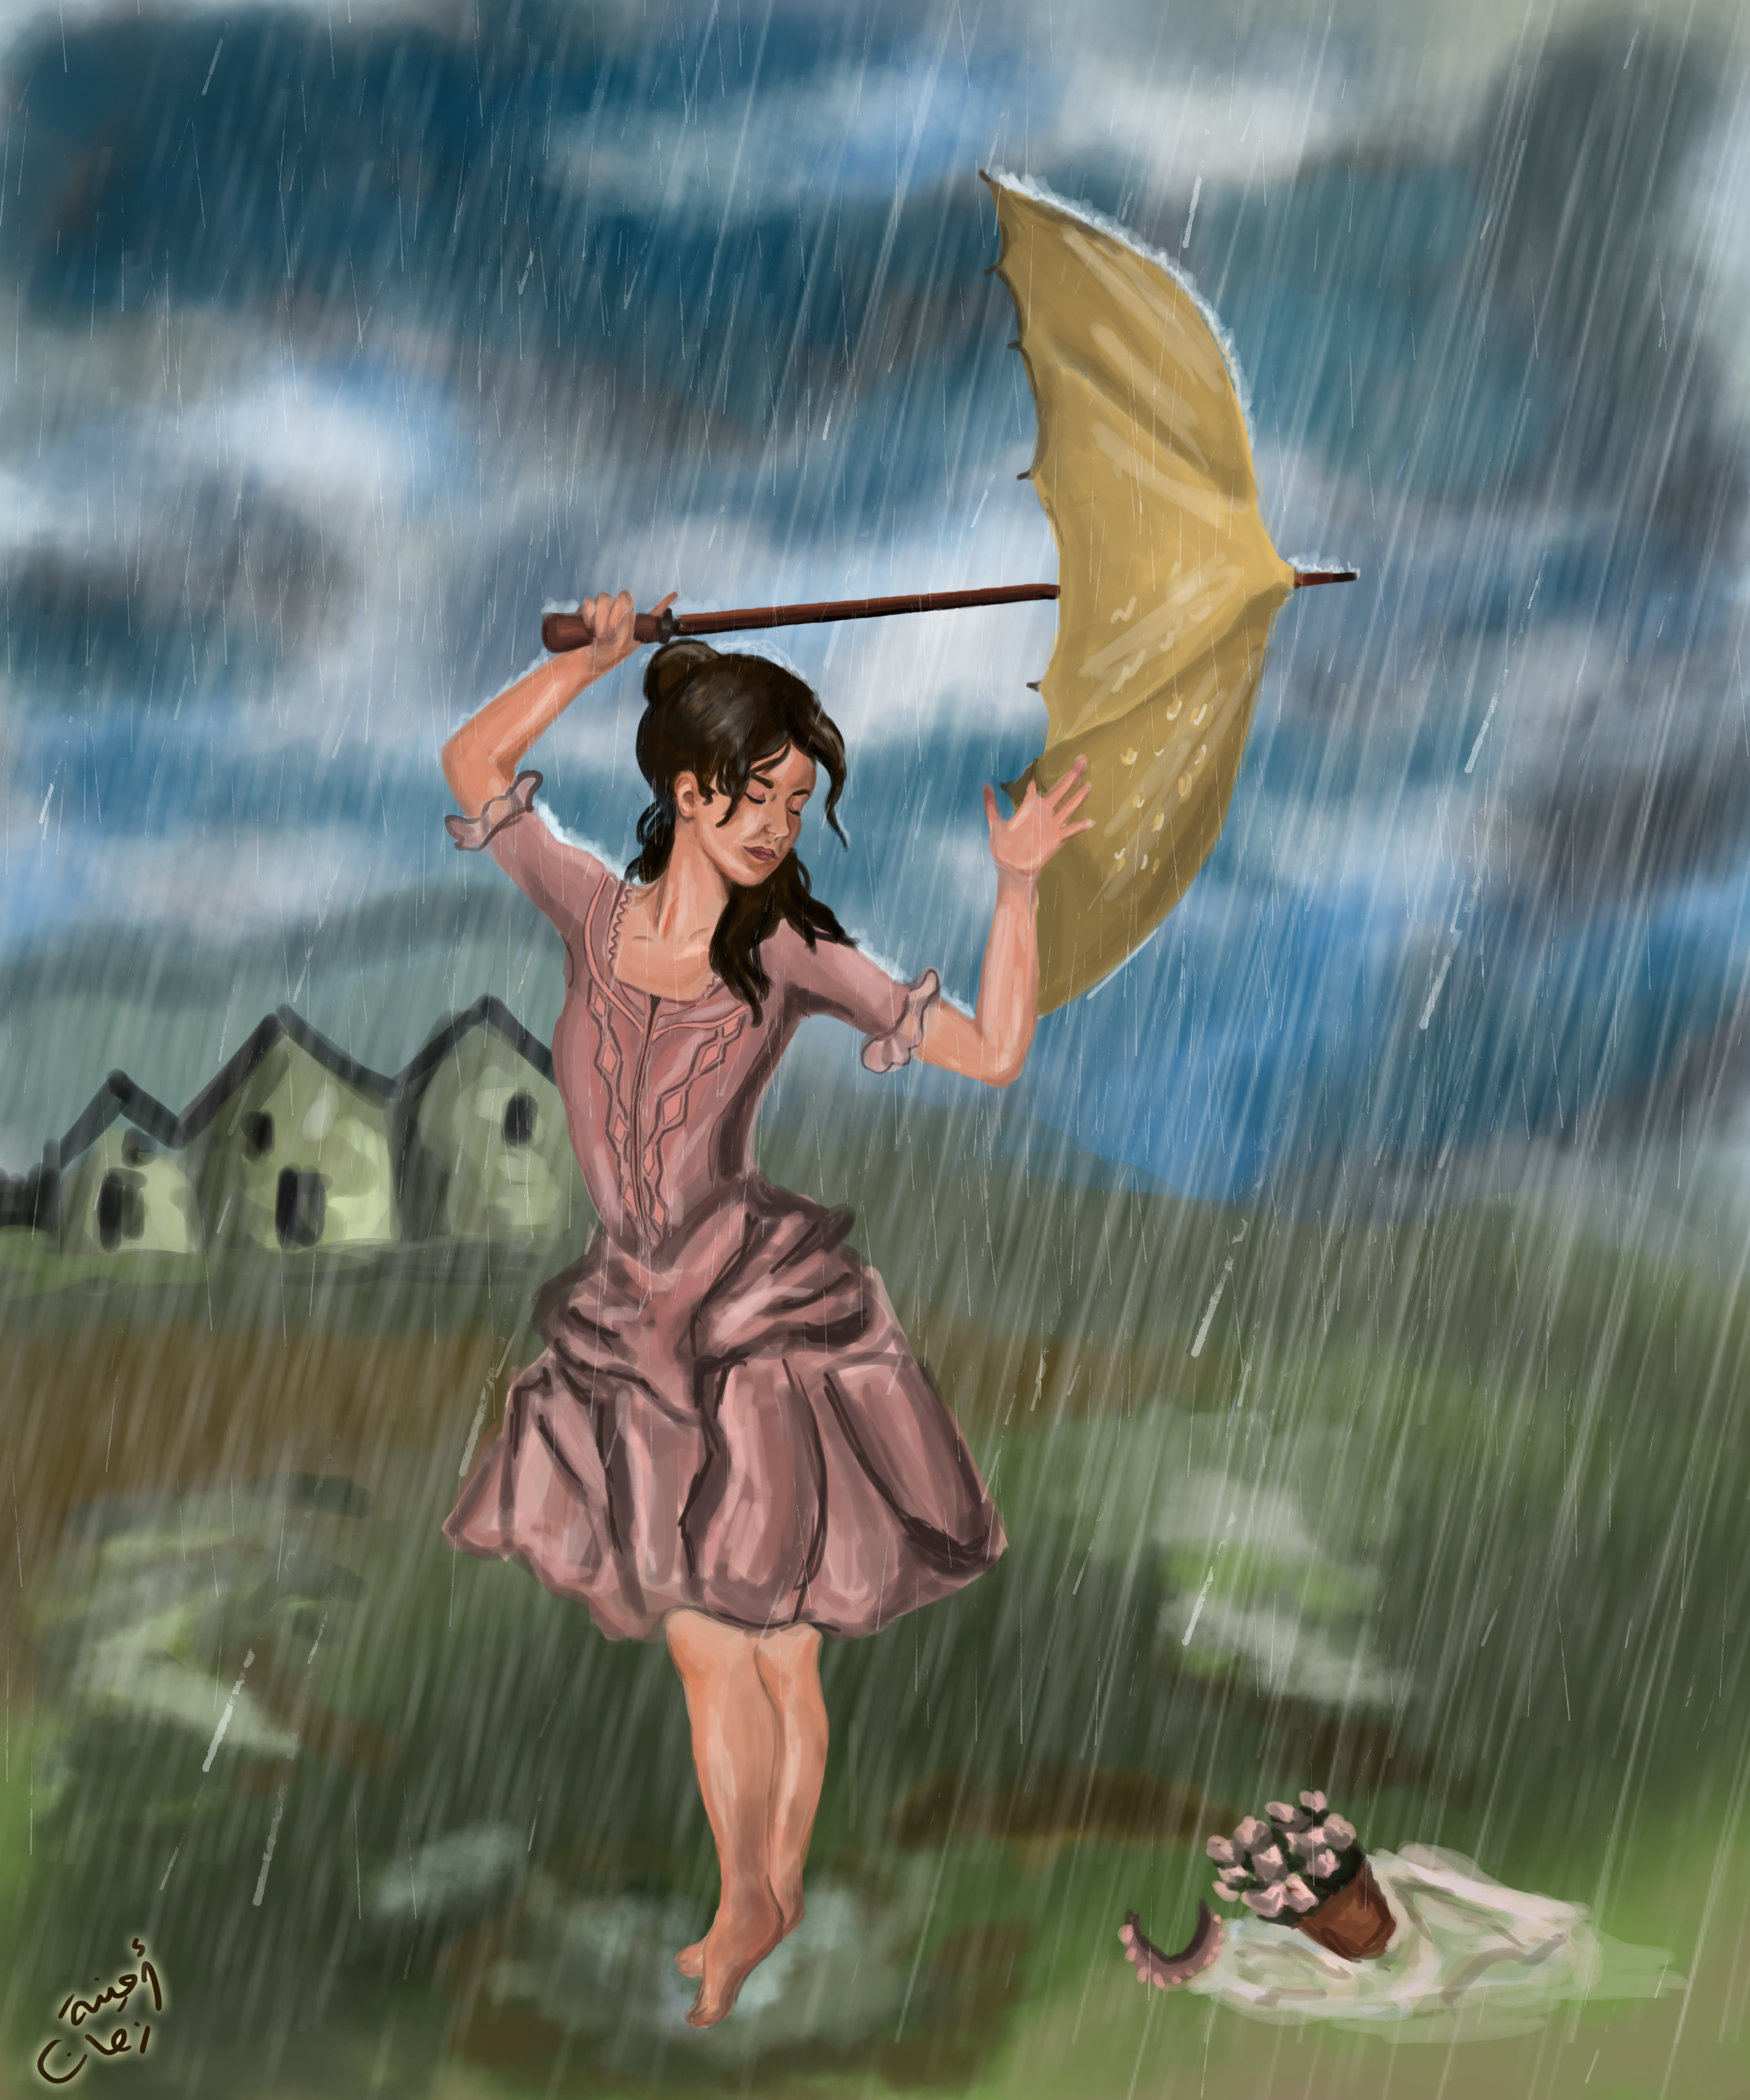 Dancing In The Rain By Meena97 On Deviantart